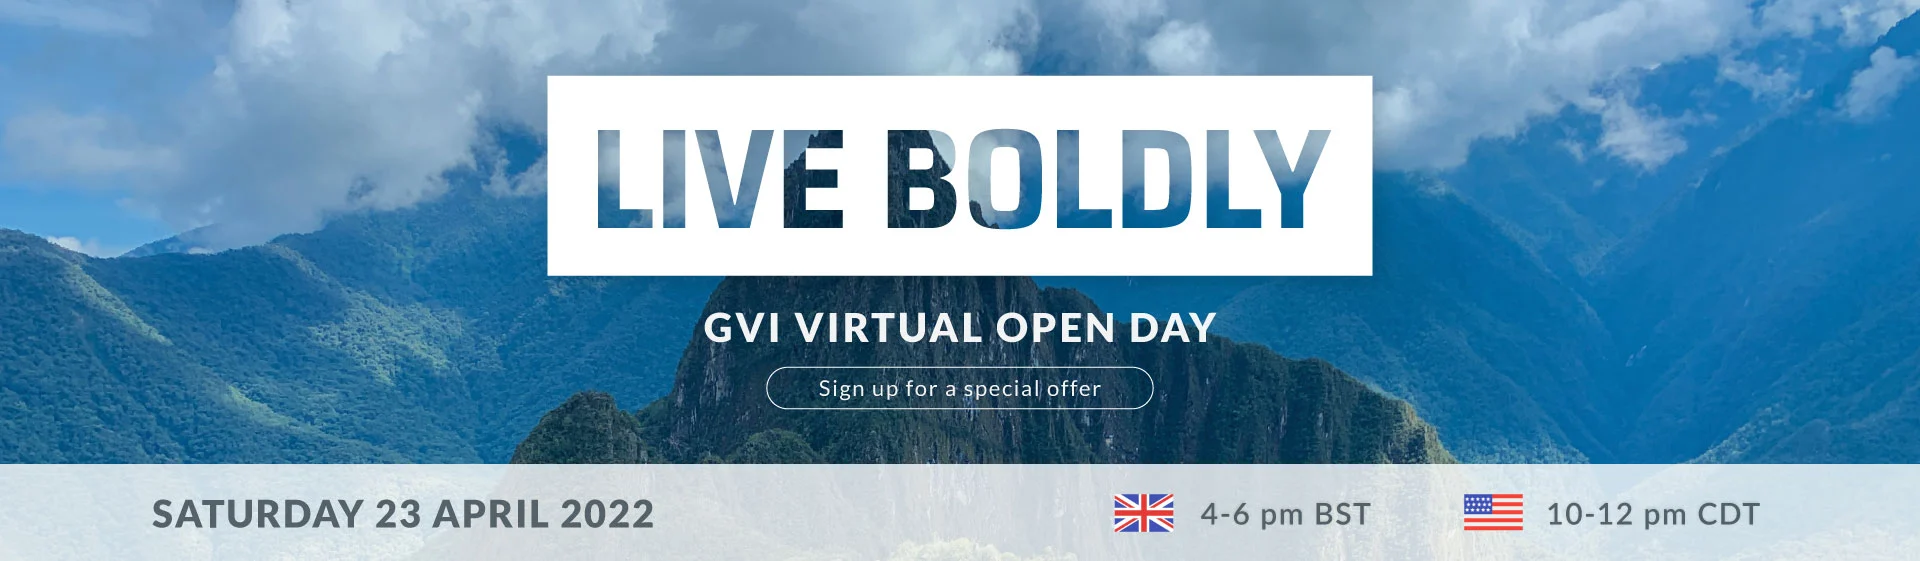 gvi virtual open day